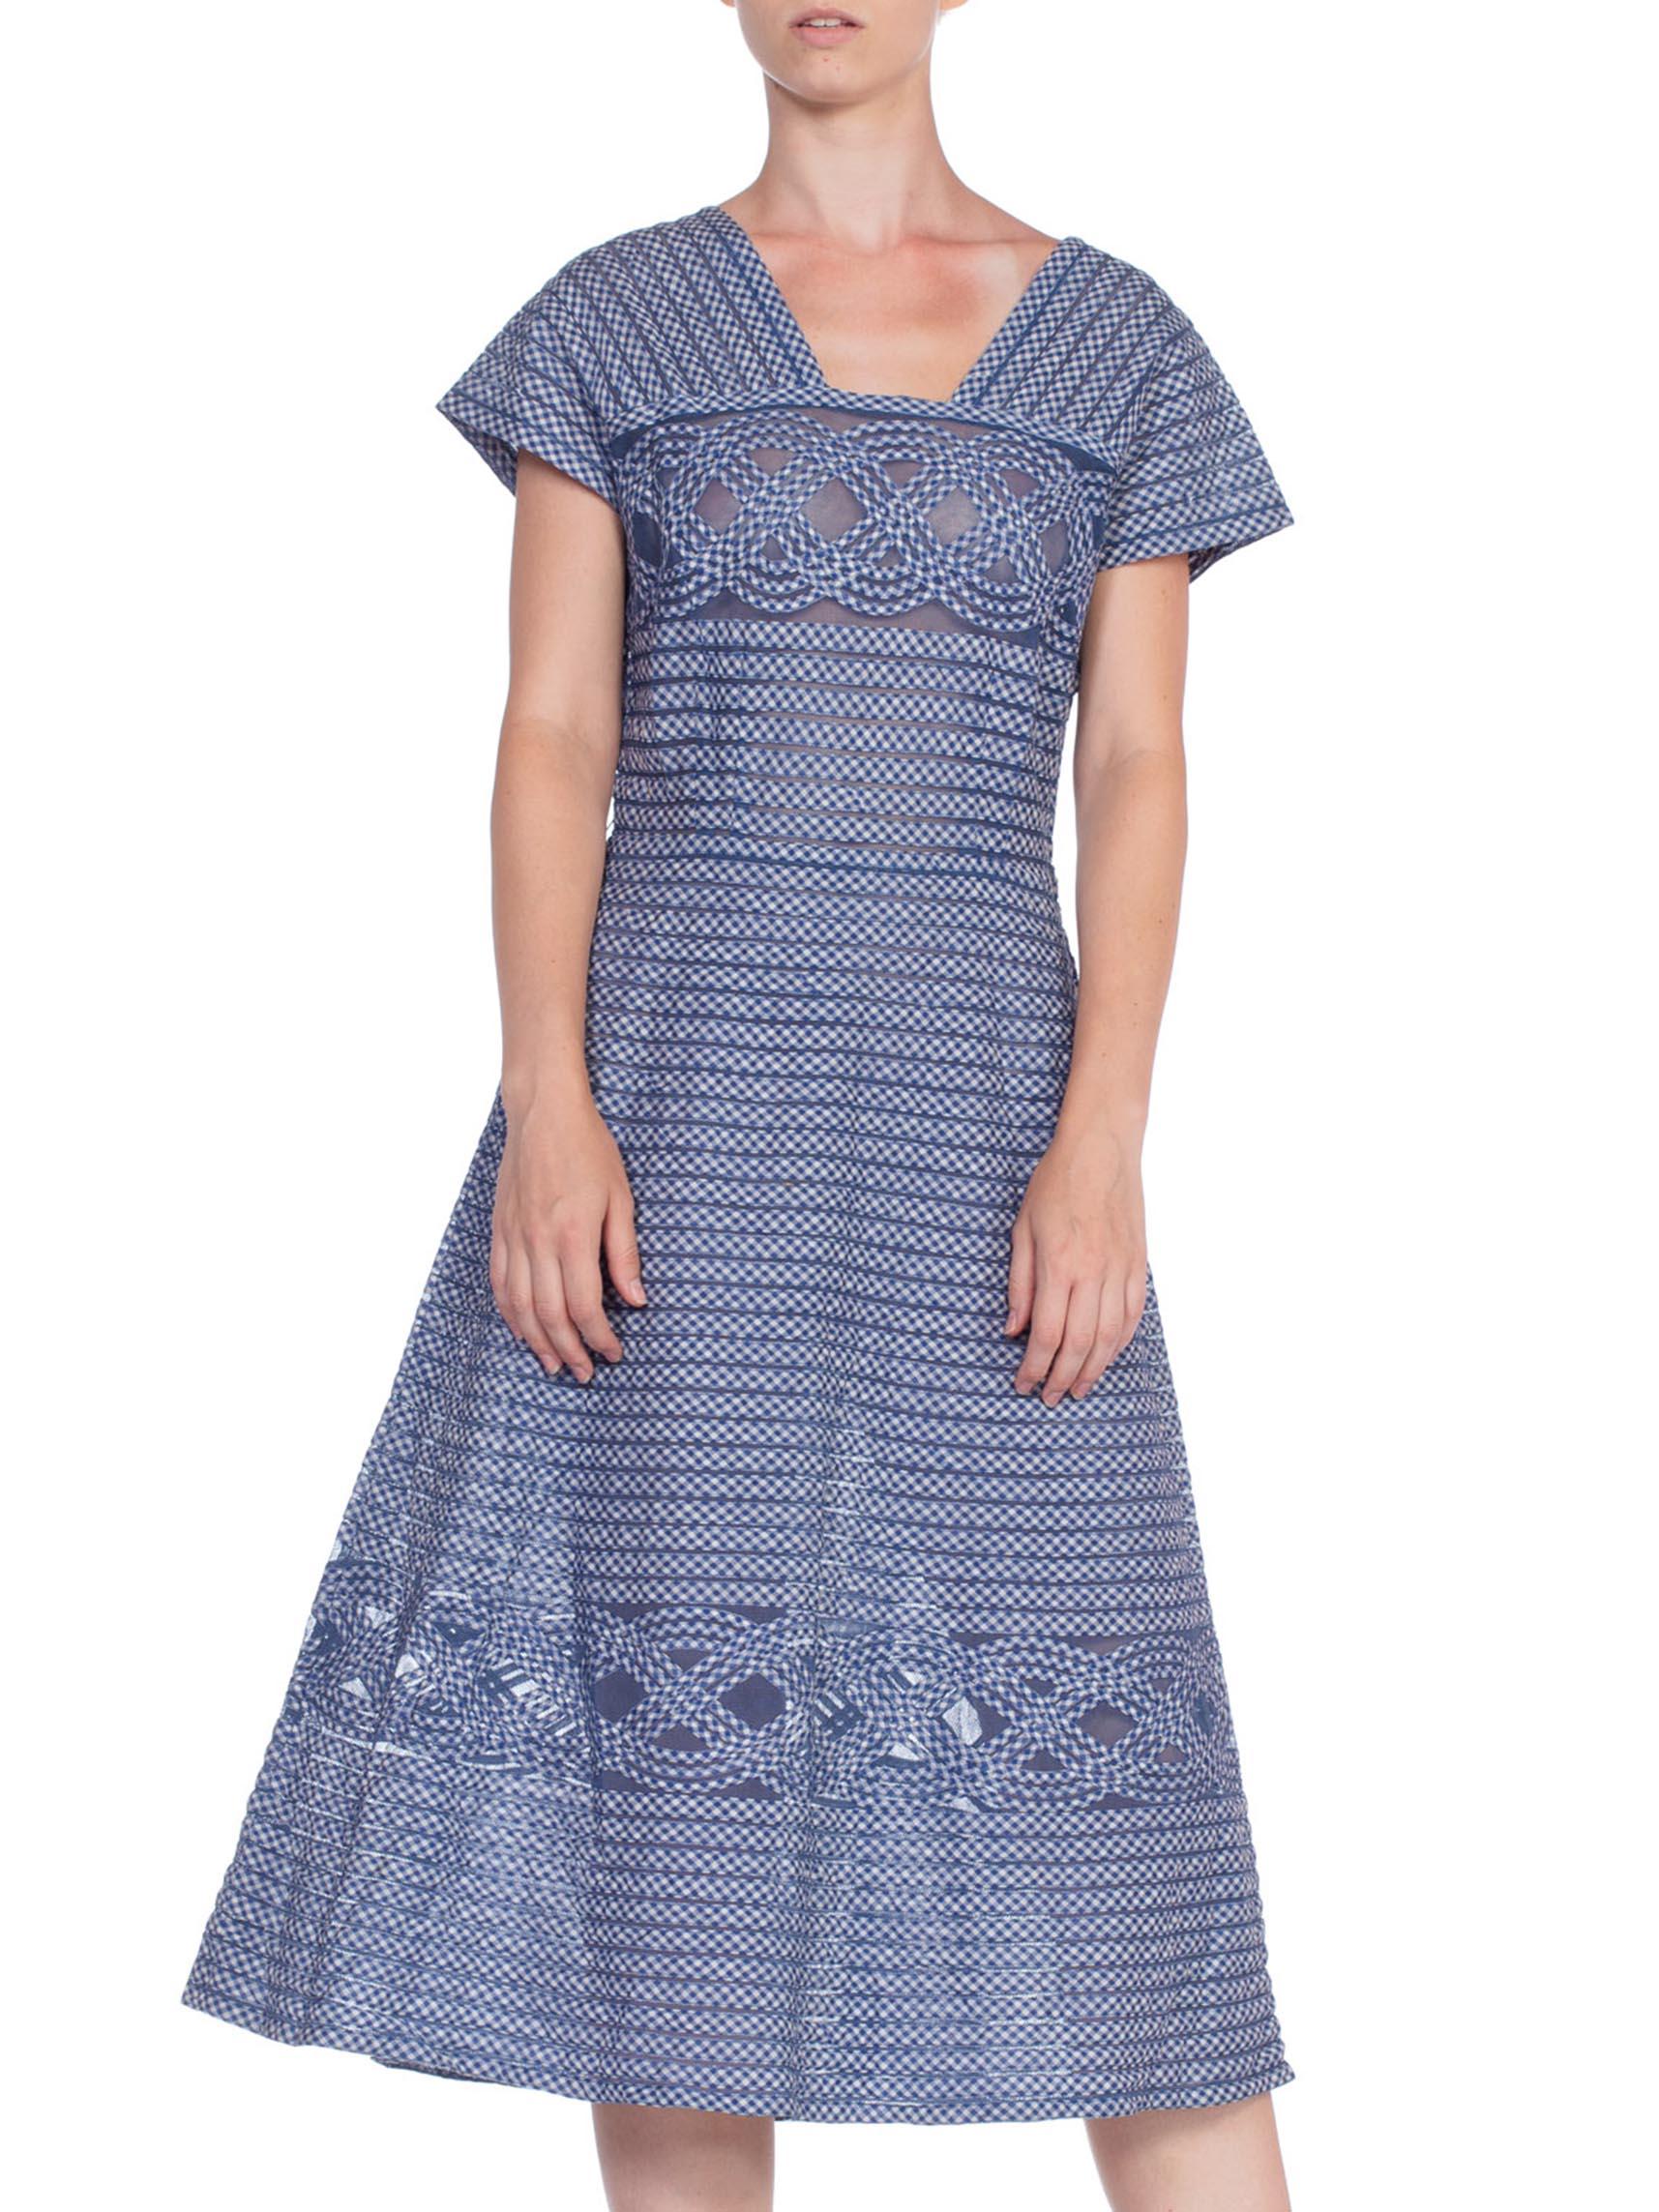 1950S KRAMER ORIGINAL Blue & White Cotton Gingham Appliqué On Net Fit And Flare Dress